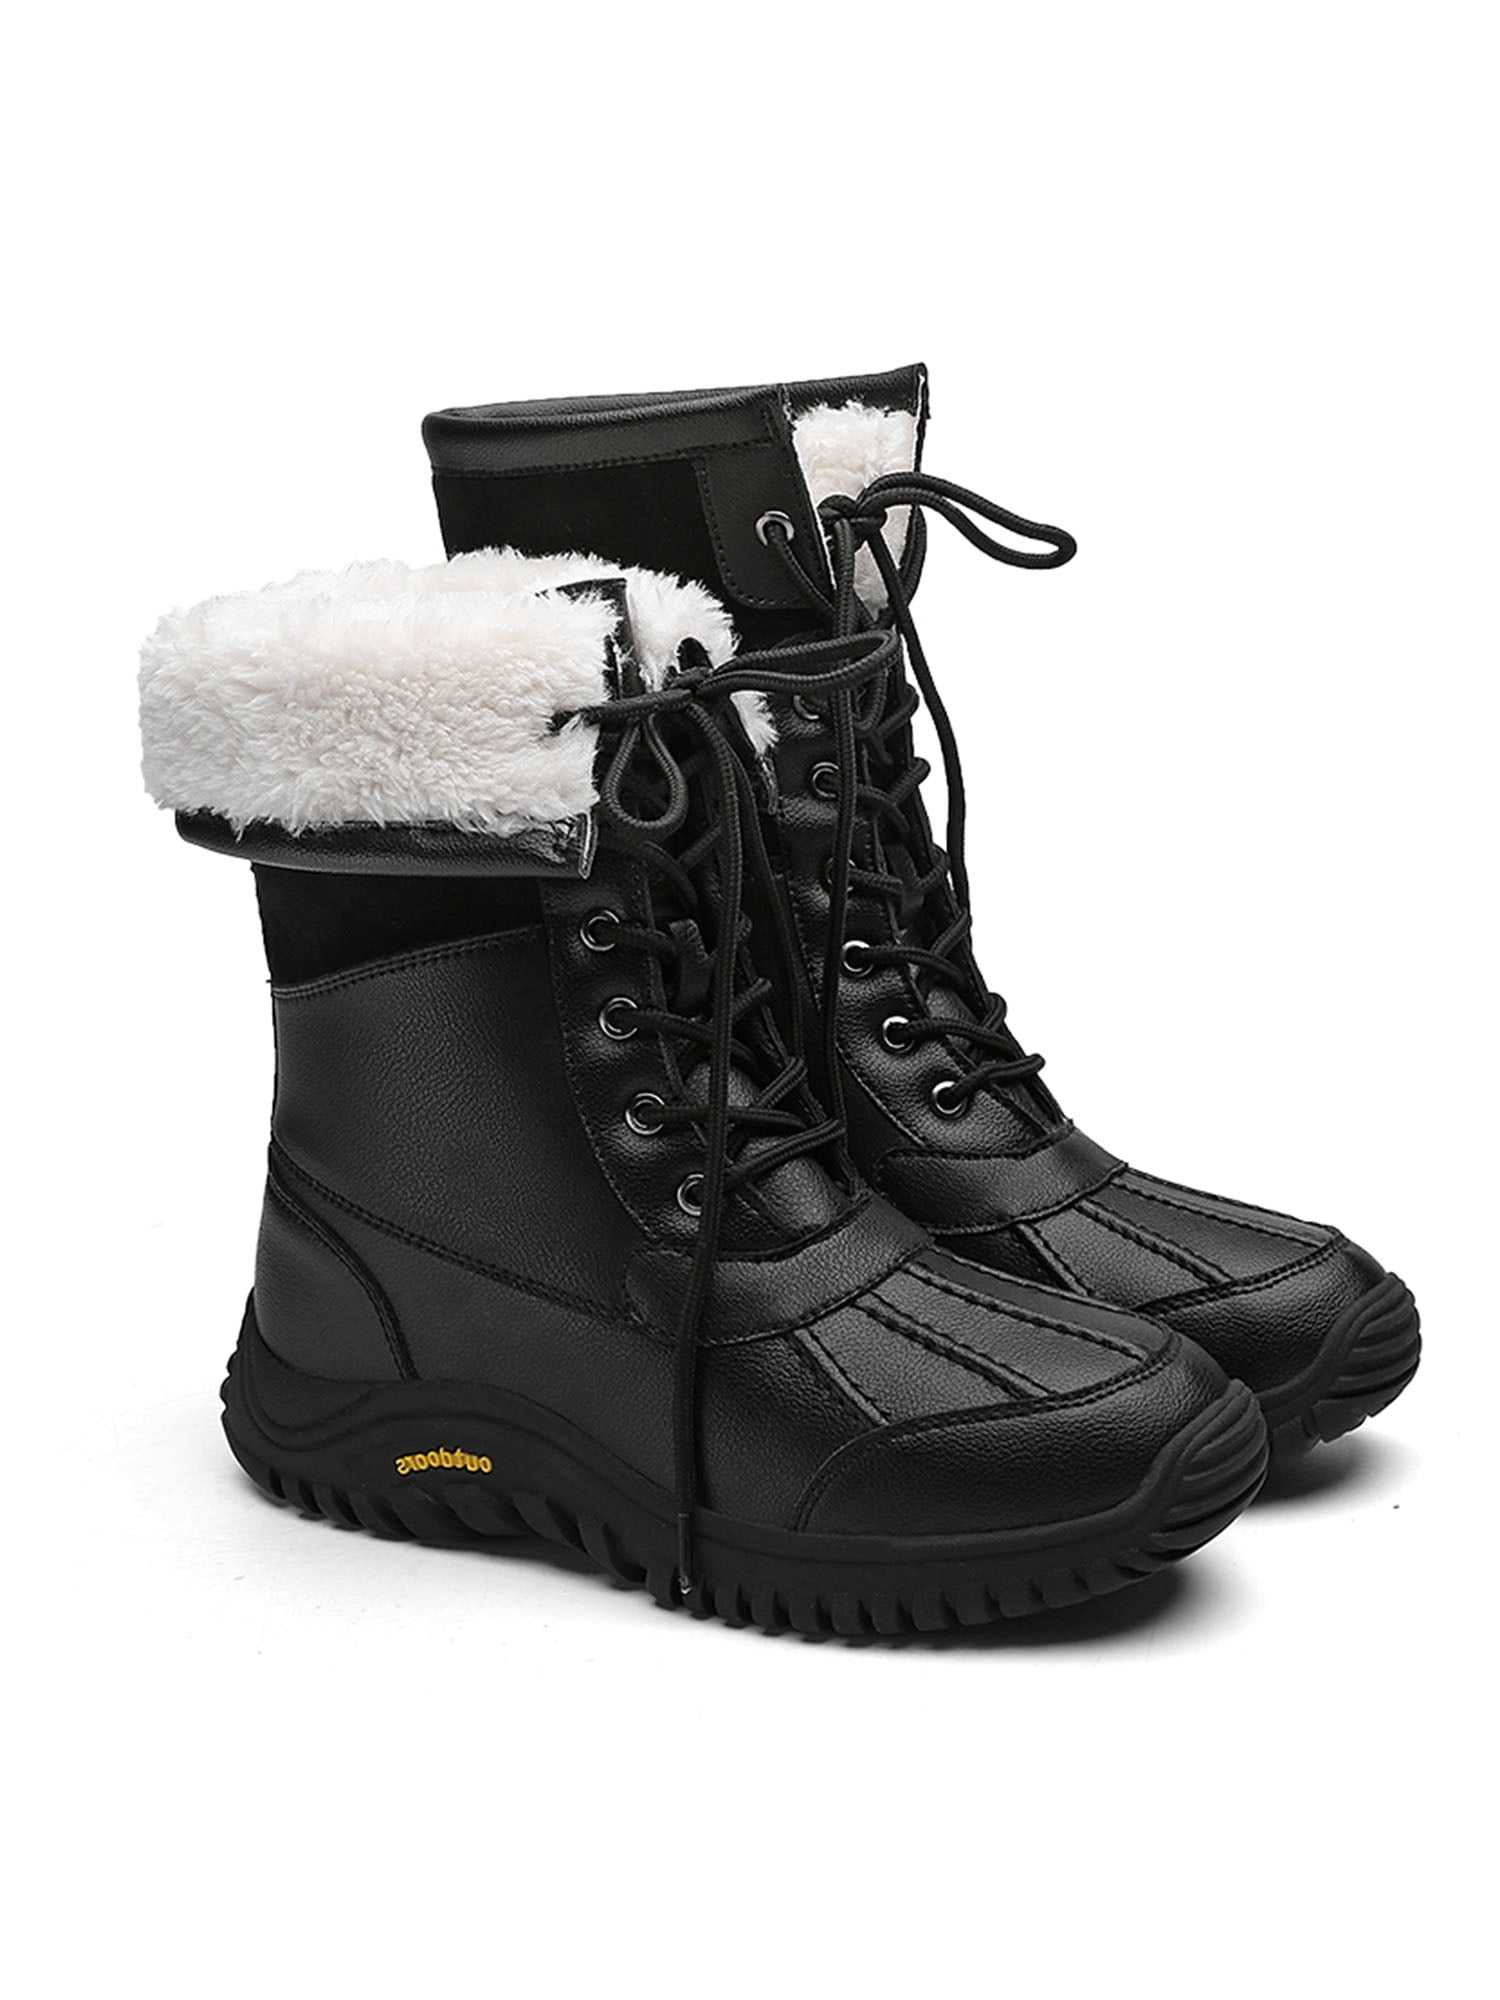 Tanleewa Fur Lining Women’s Winter Boots Waterproof Snow Boots 6 Female ...